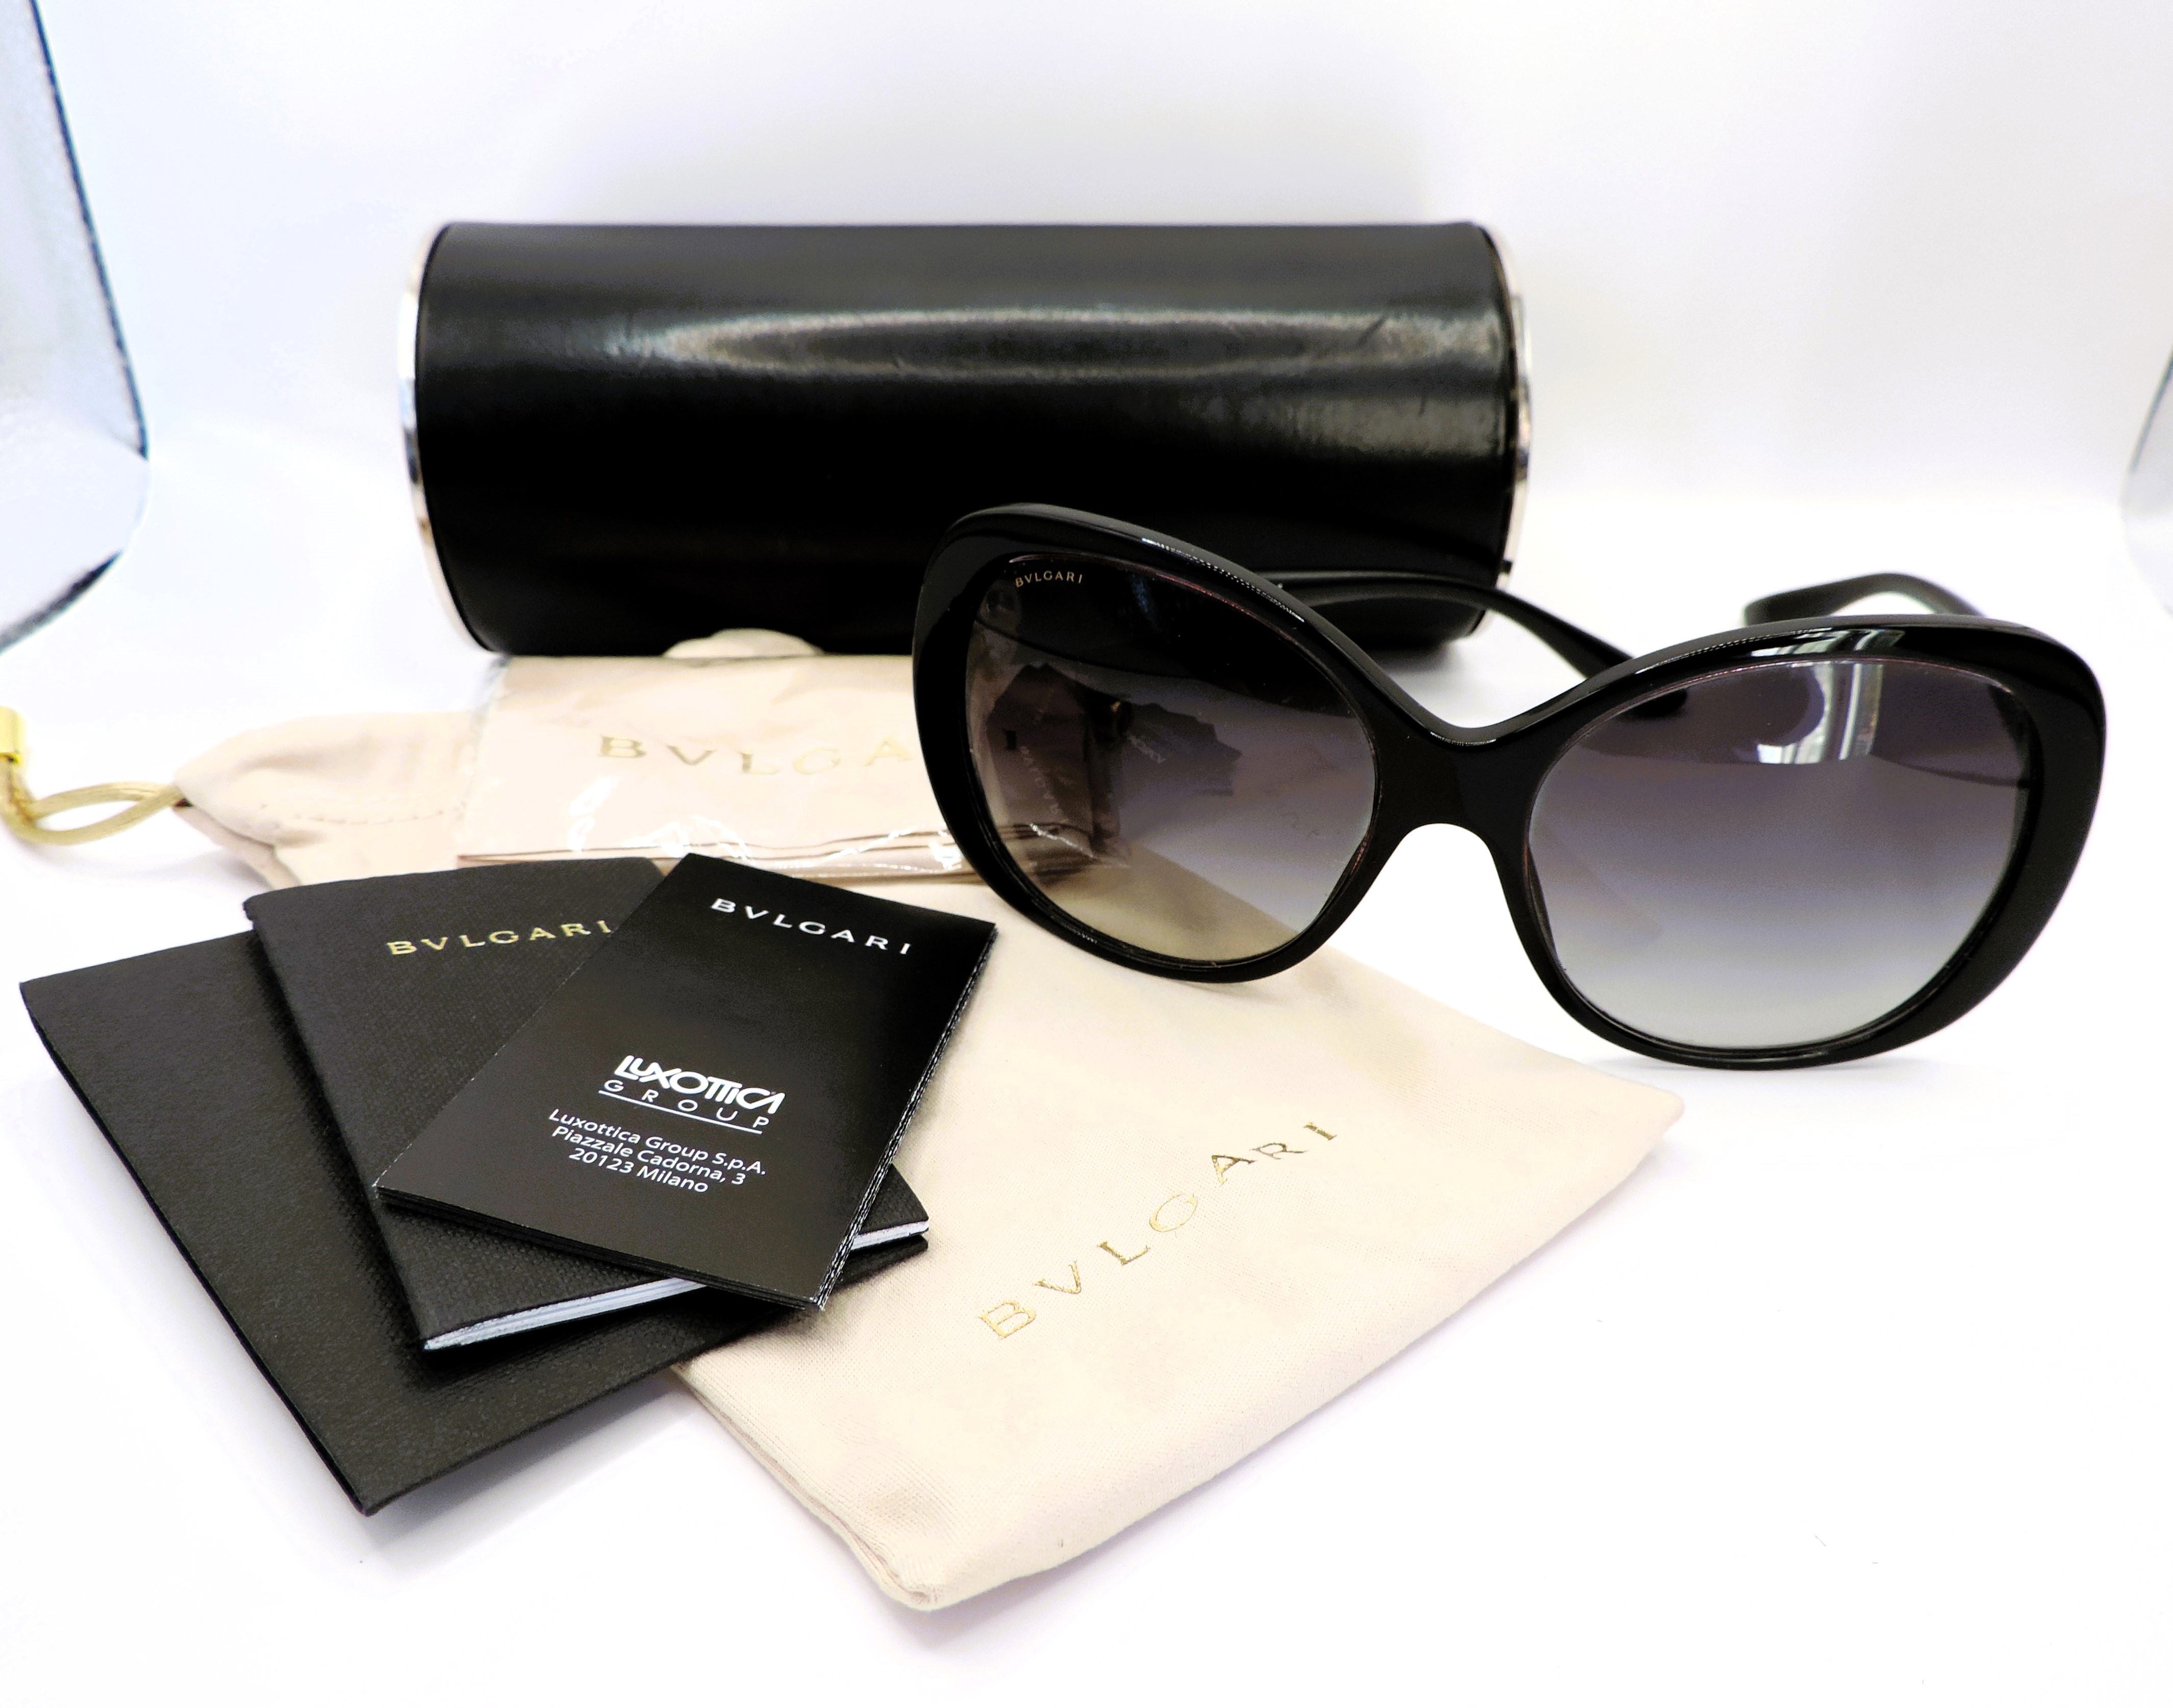 BVLGARI Black Sunglasses 8171-C Jewelled Hinged Detail New With Box & Certificate - Image 17 of 17